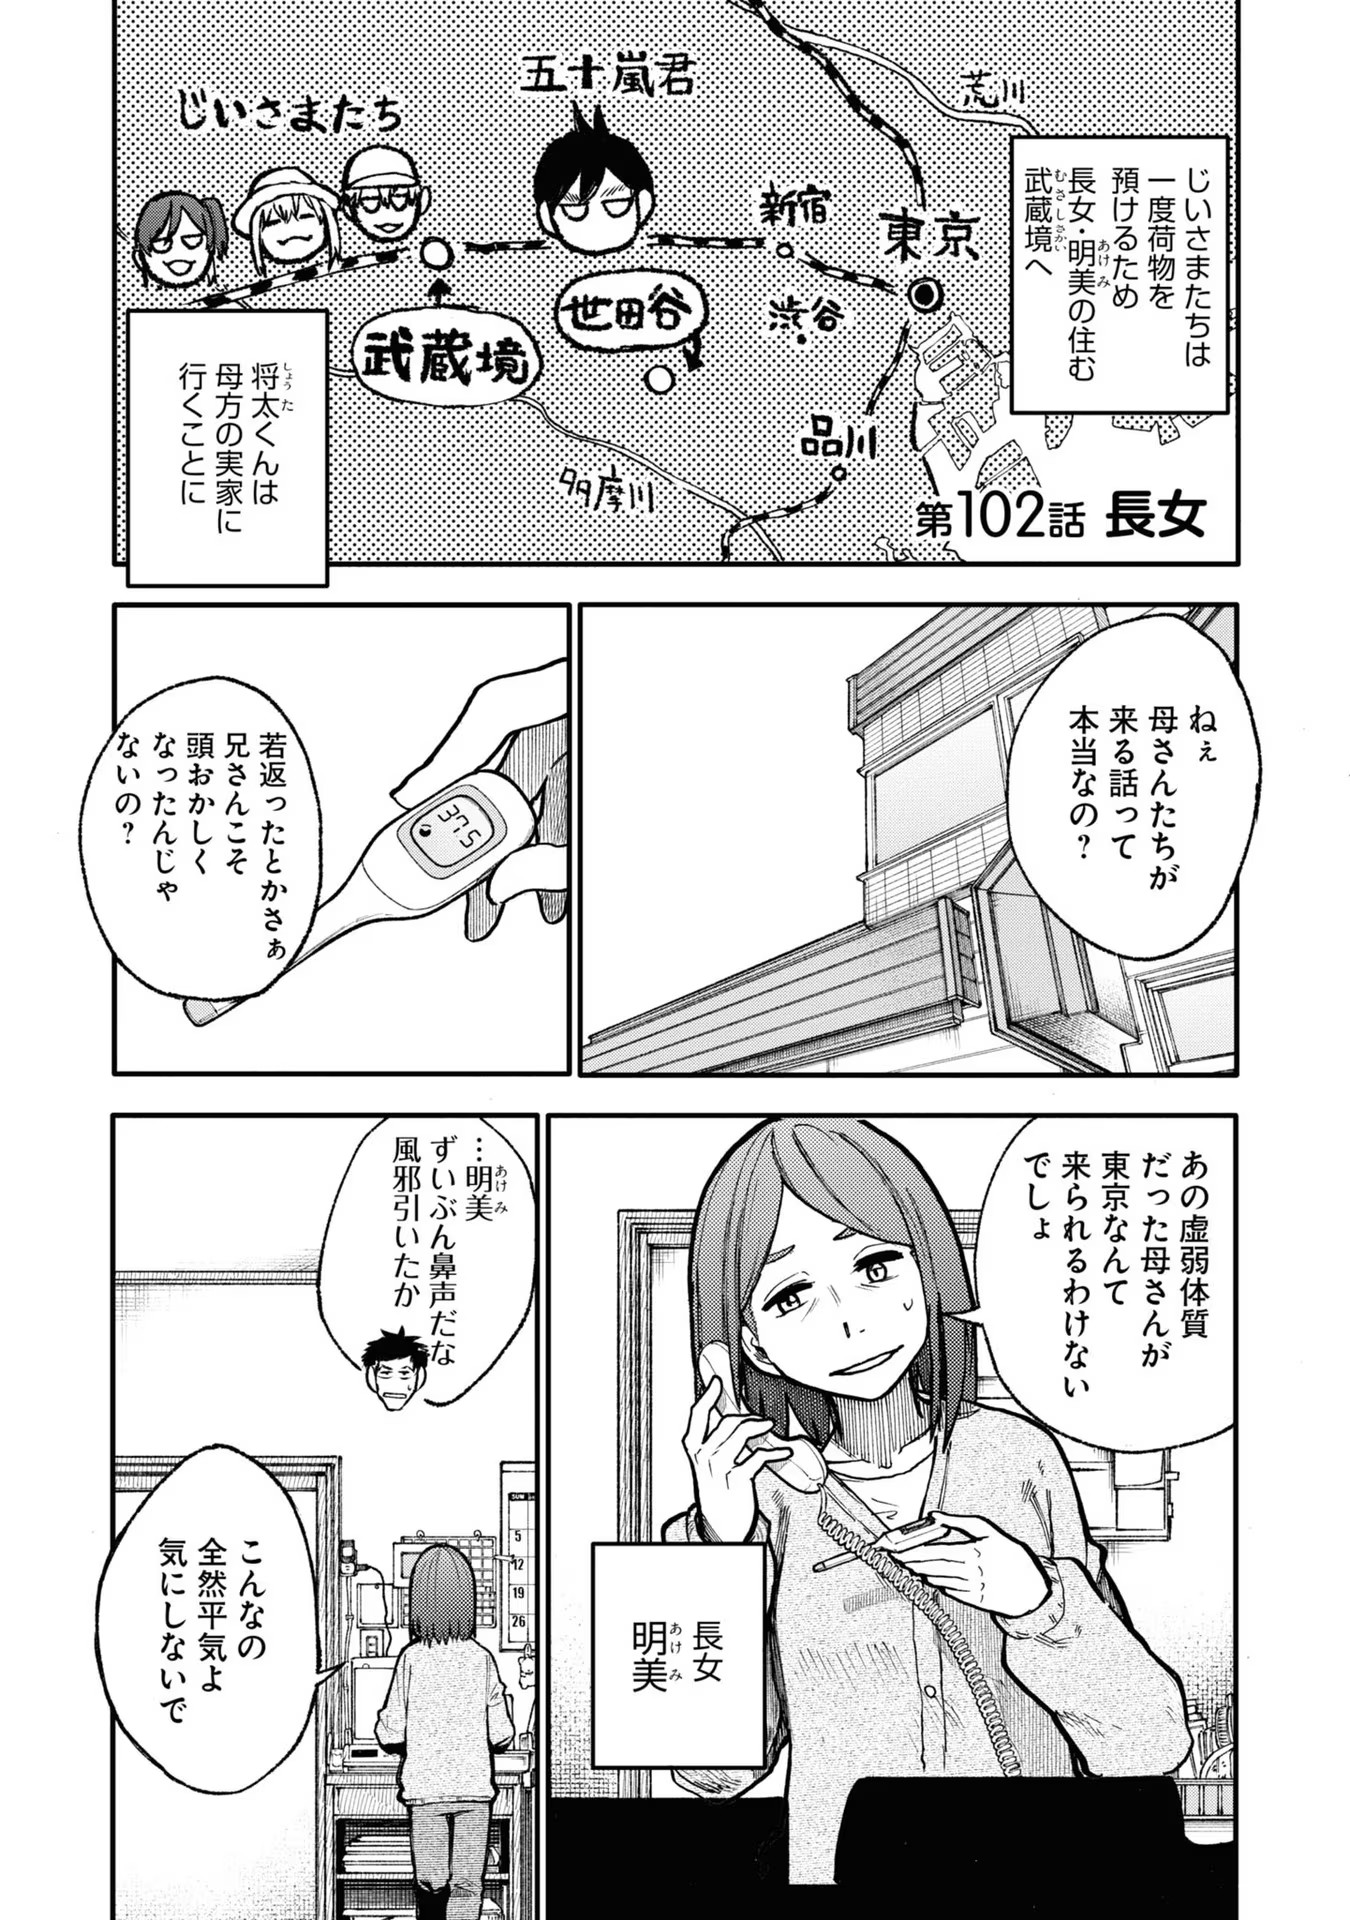 Ojii-san to Obaa-san ga Wakigaetta Hanashi - Chapter 102 - Page 1